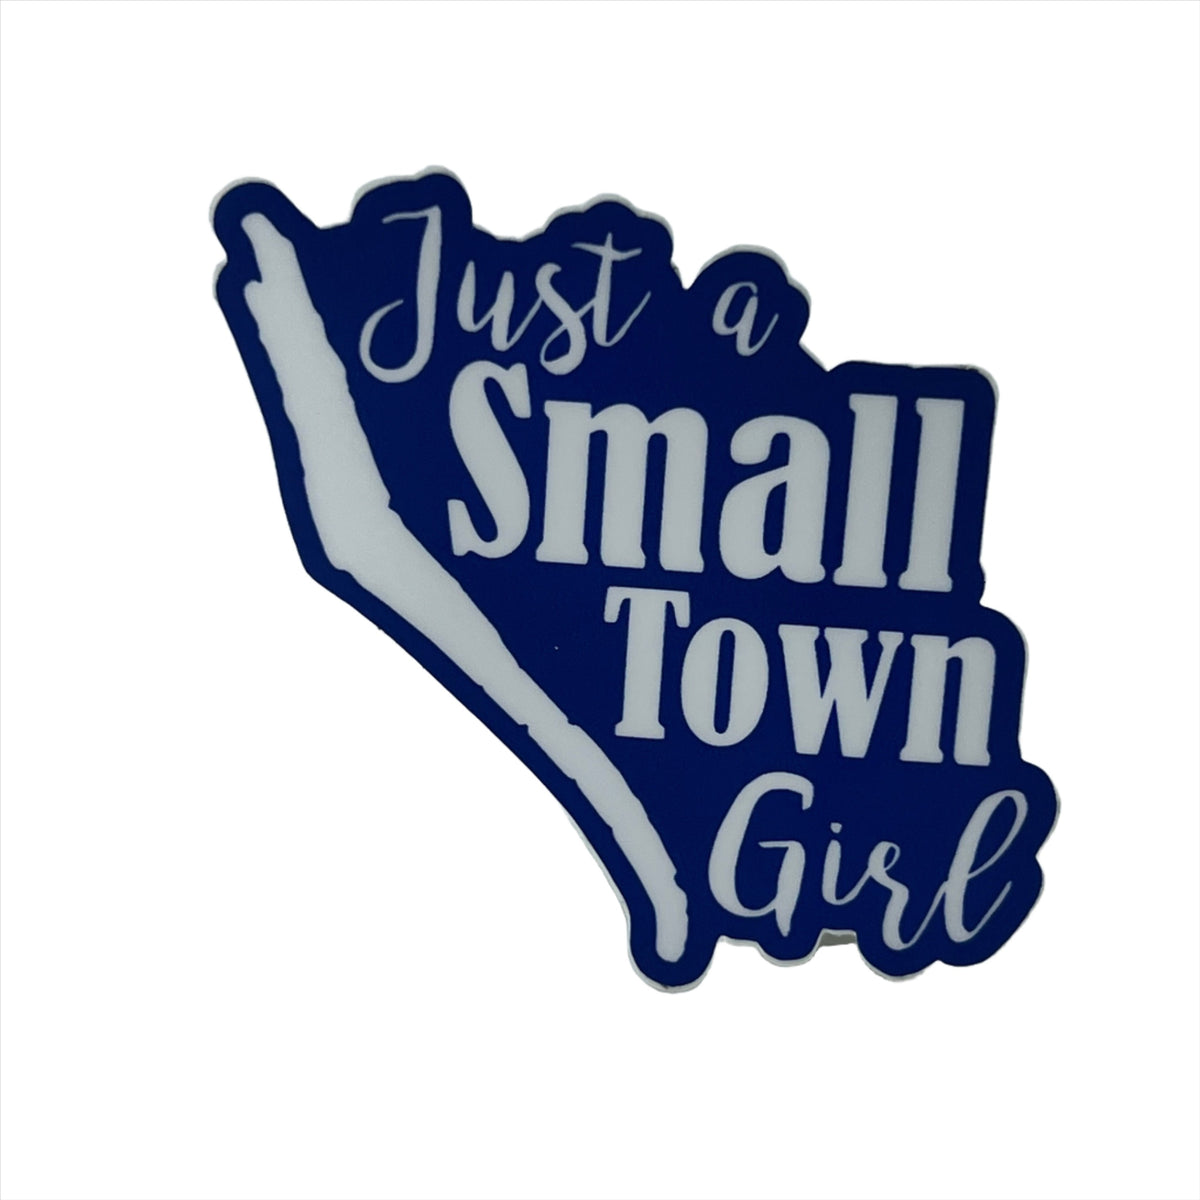 Skaneateles Lake Small Town Girl Sticker